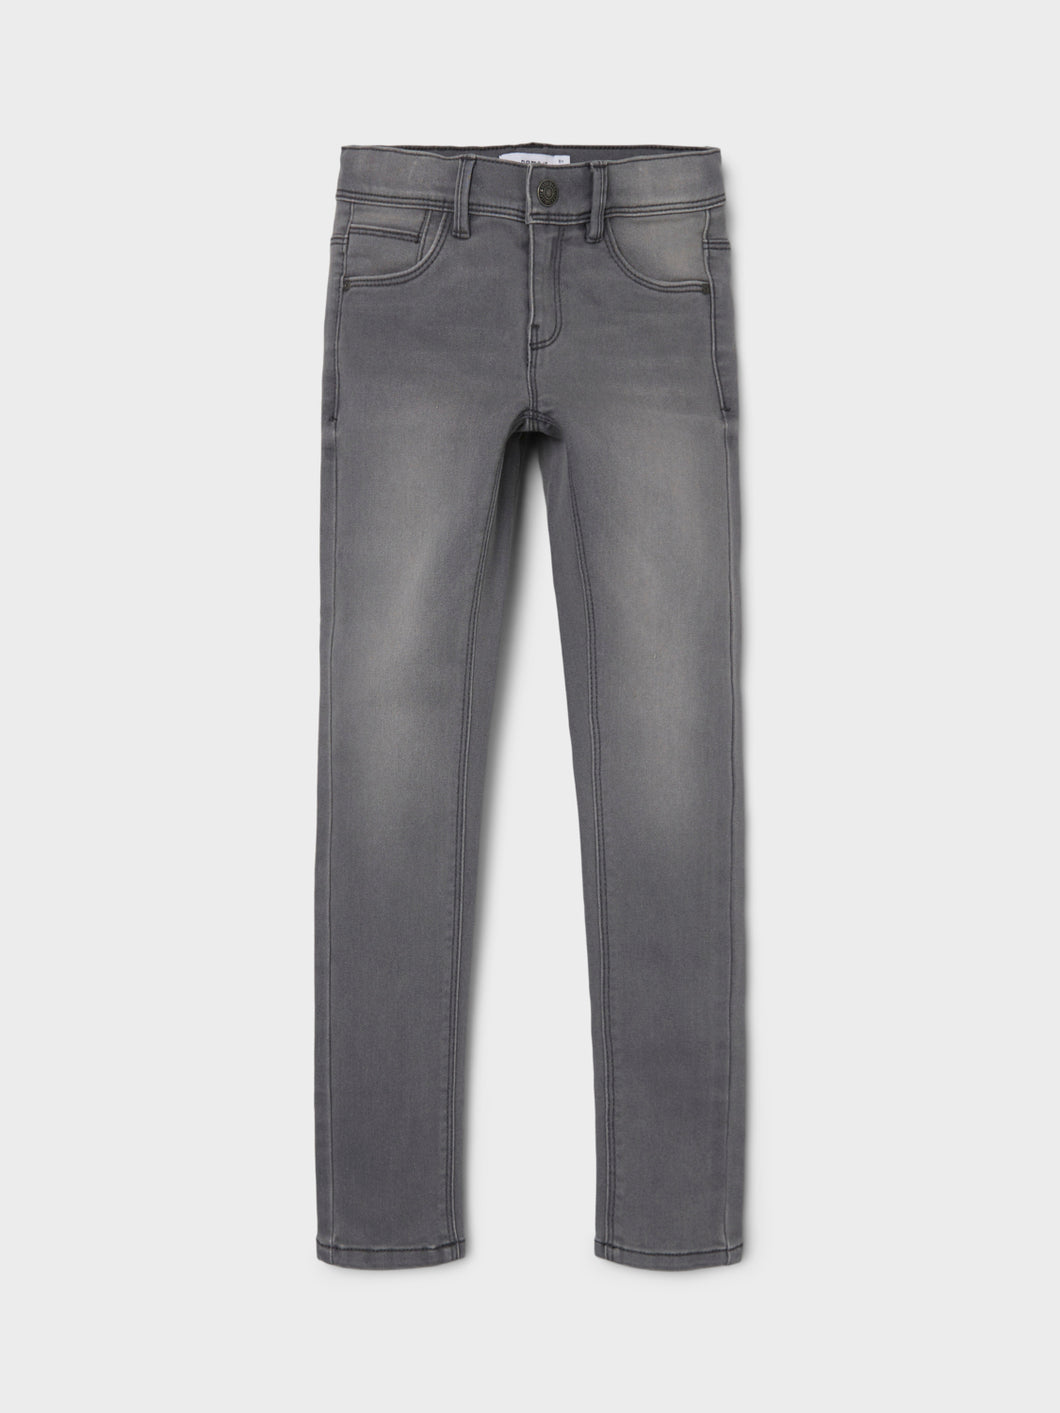 NKFPOLLY Jeans - Light Grey Denim